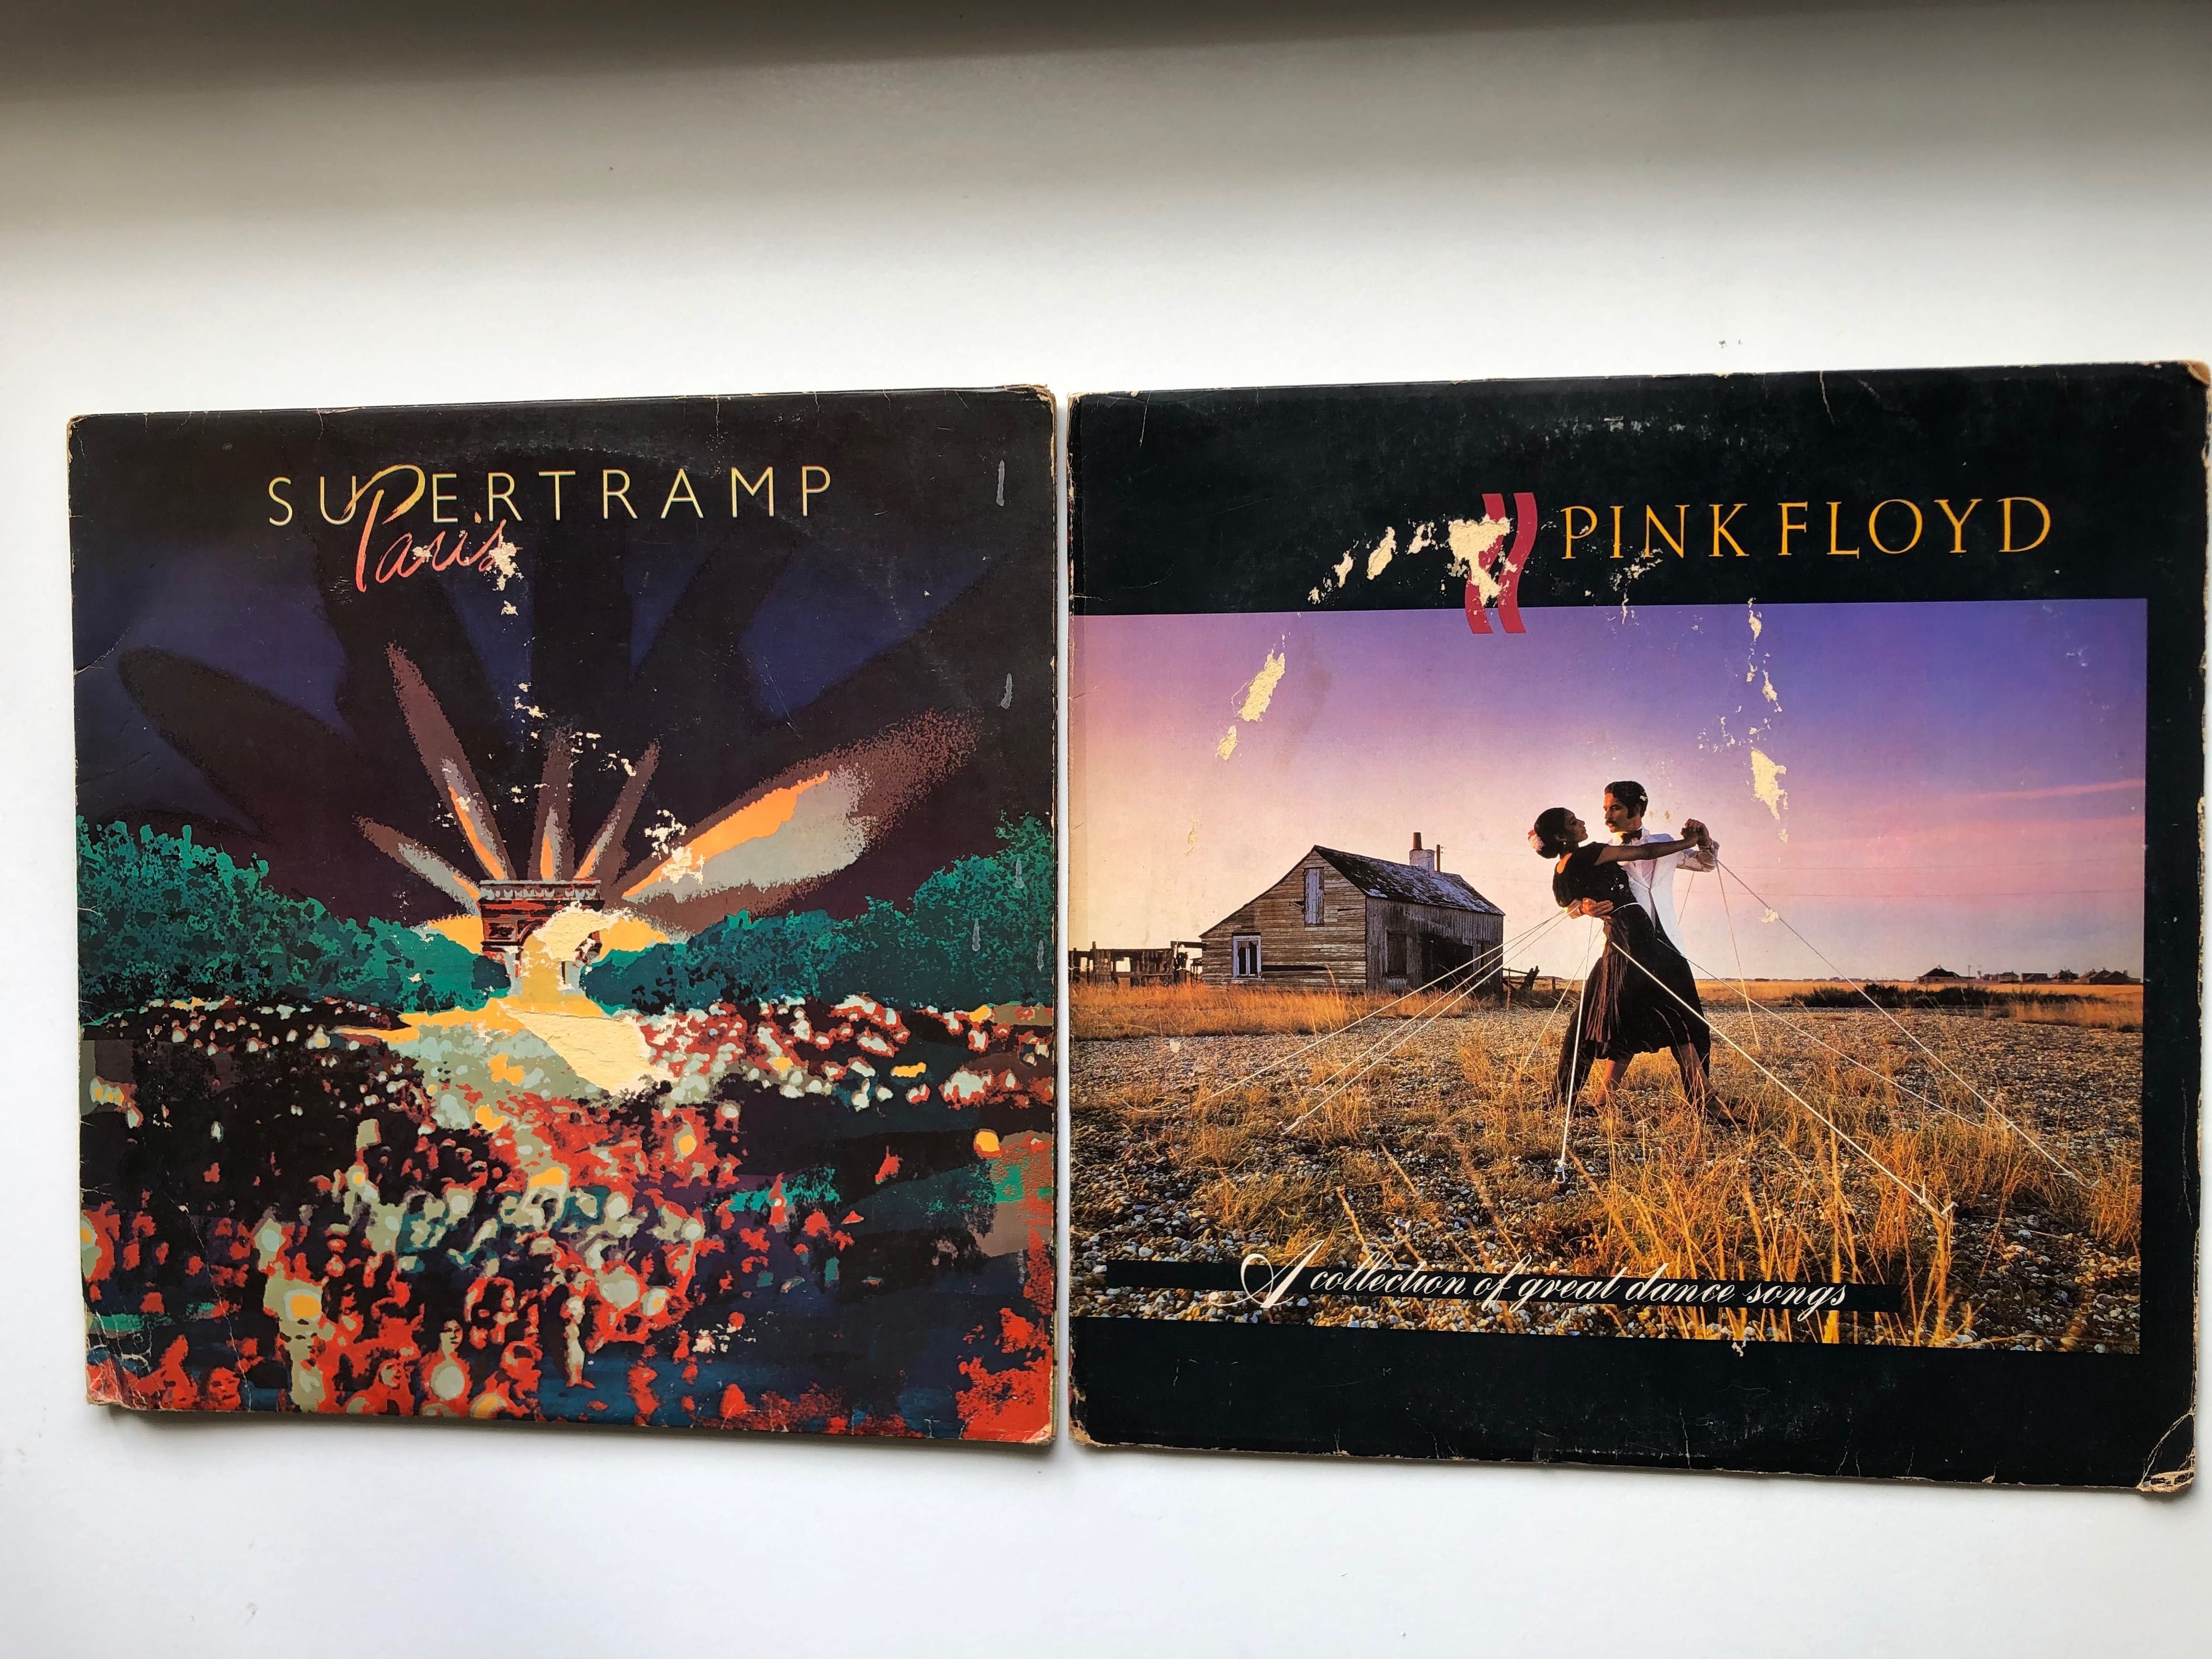 Discos de vinil Supertramp e Pink Floyd